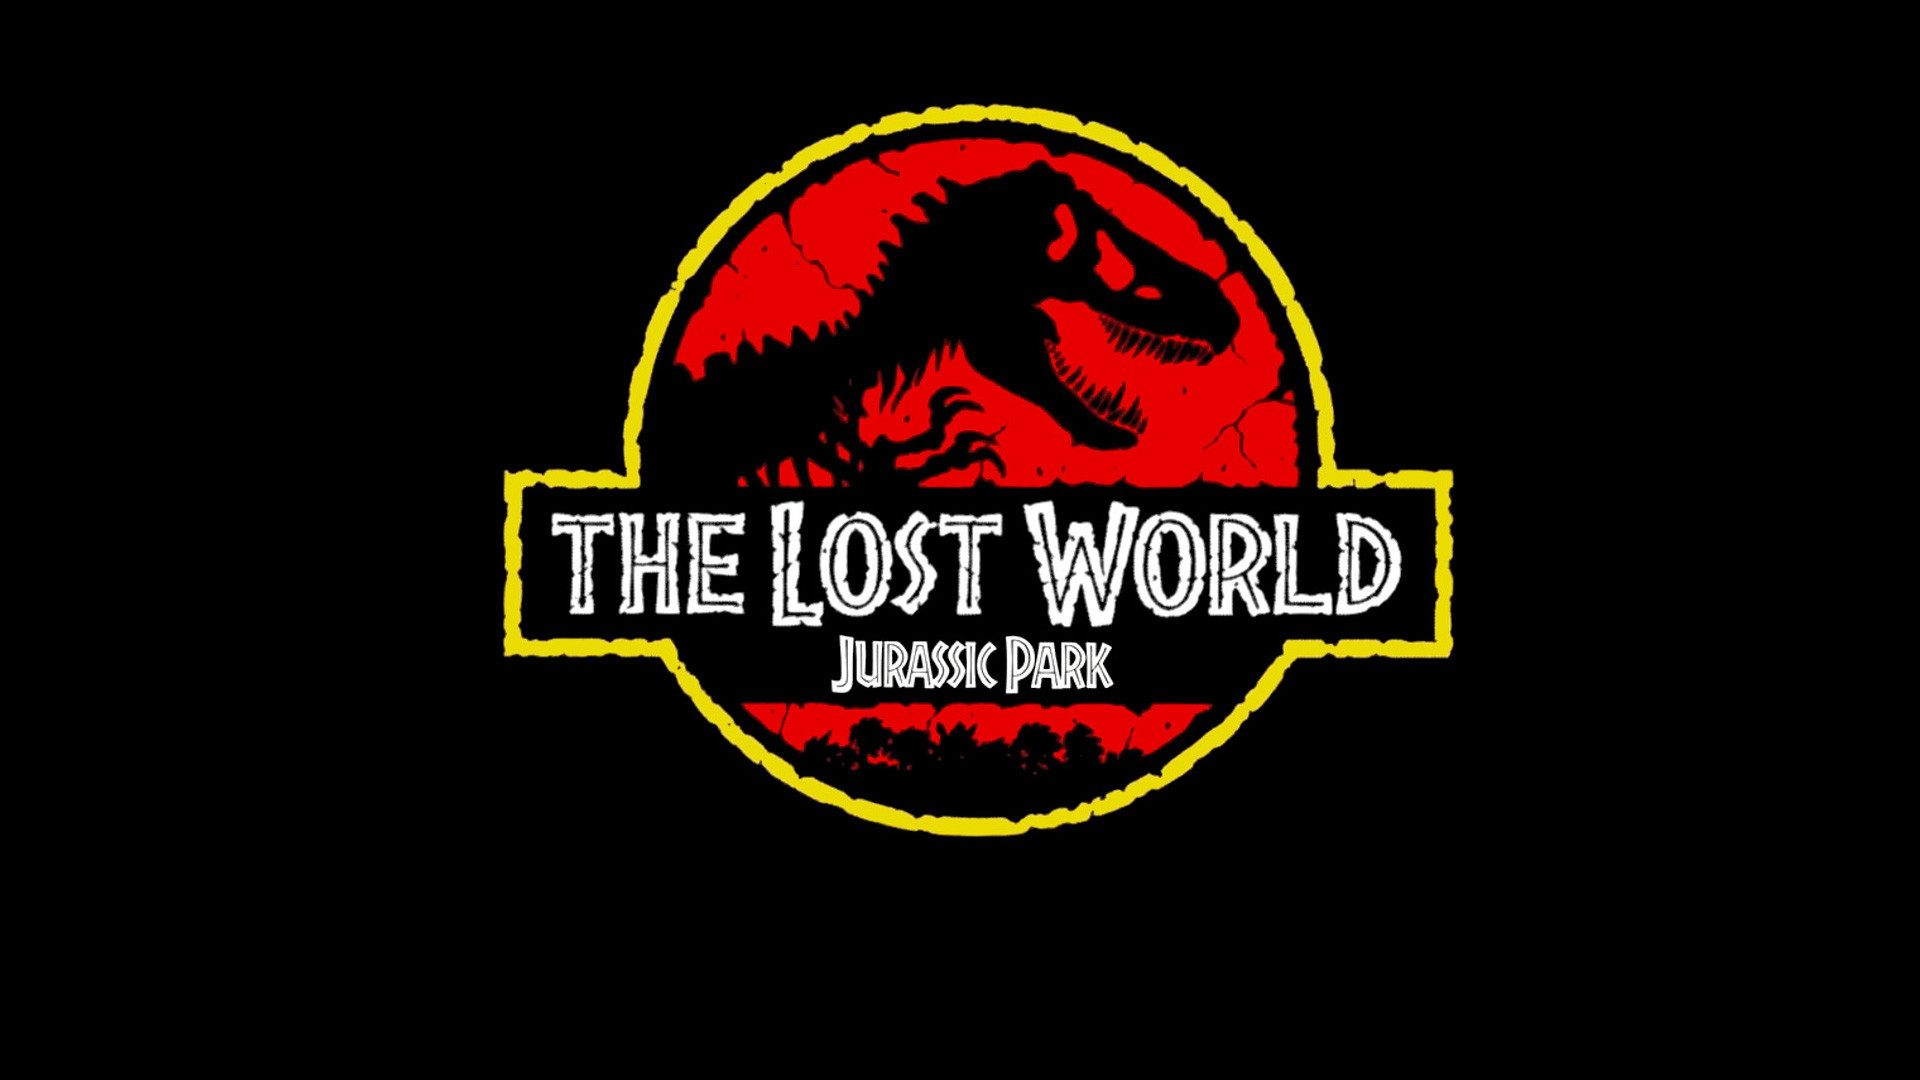 THE LOST WORLD: JURASSIC PARK